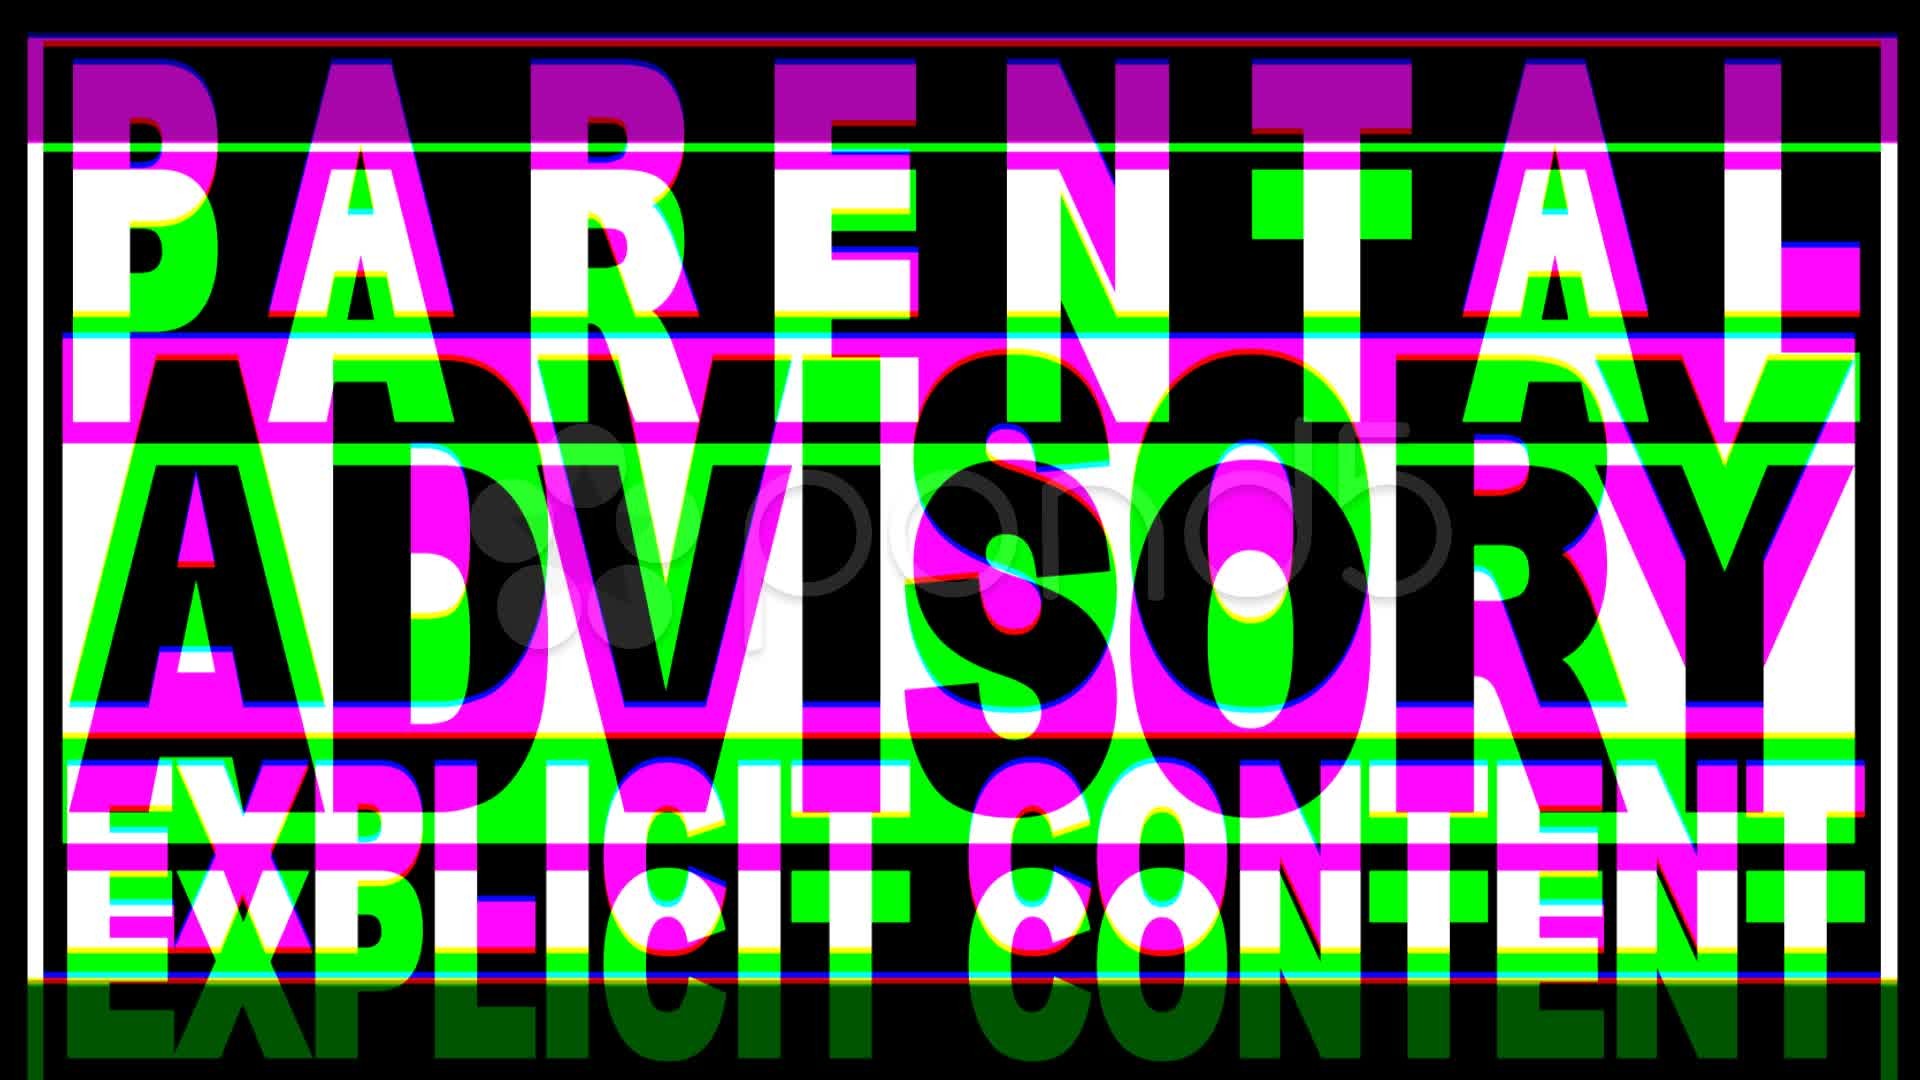 Parental advisory explicit content обои на телефон